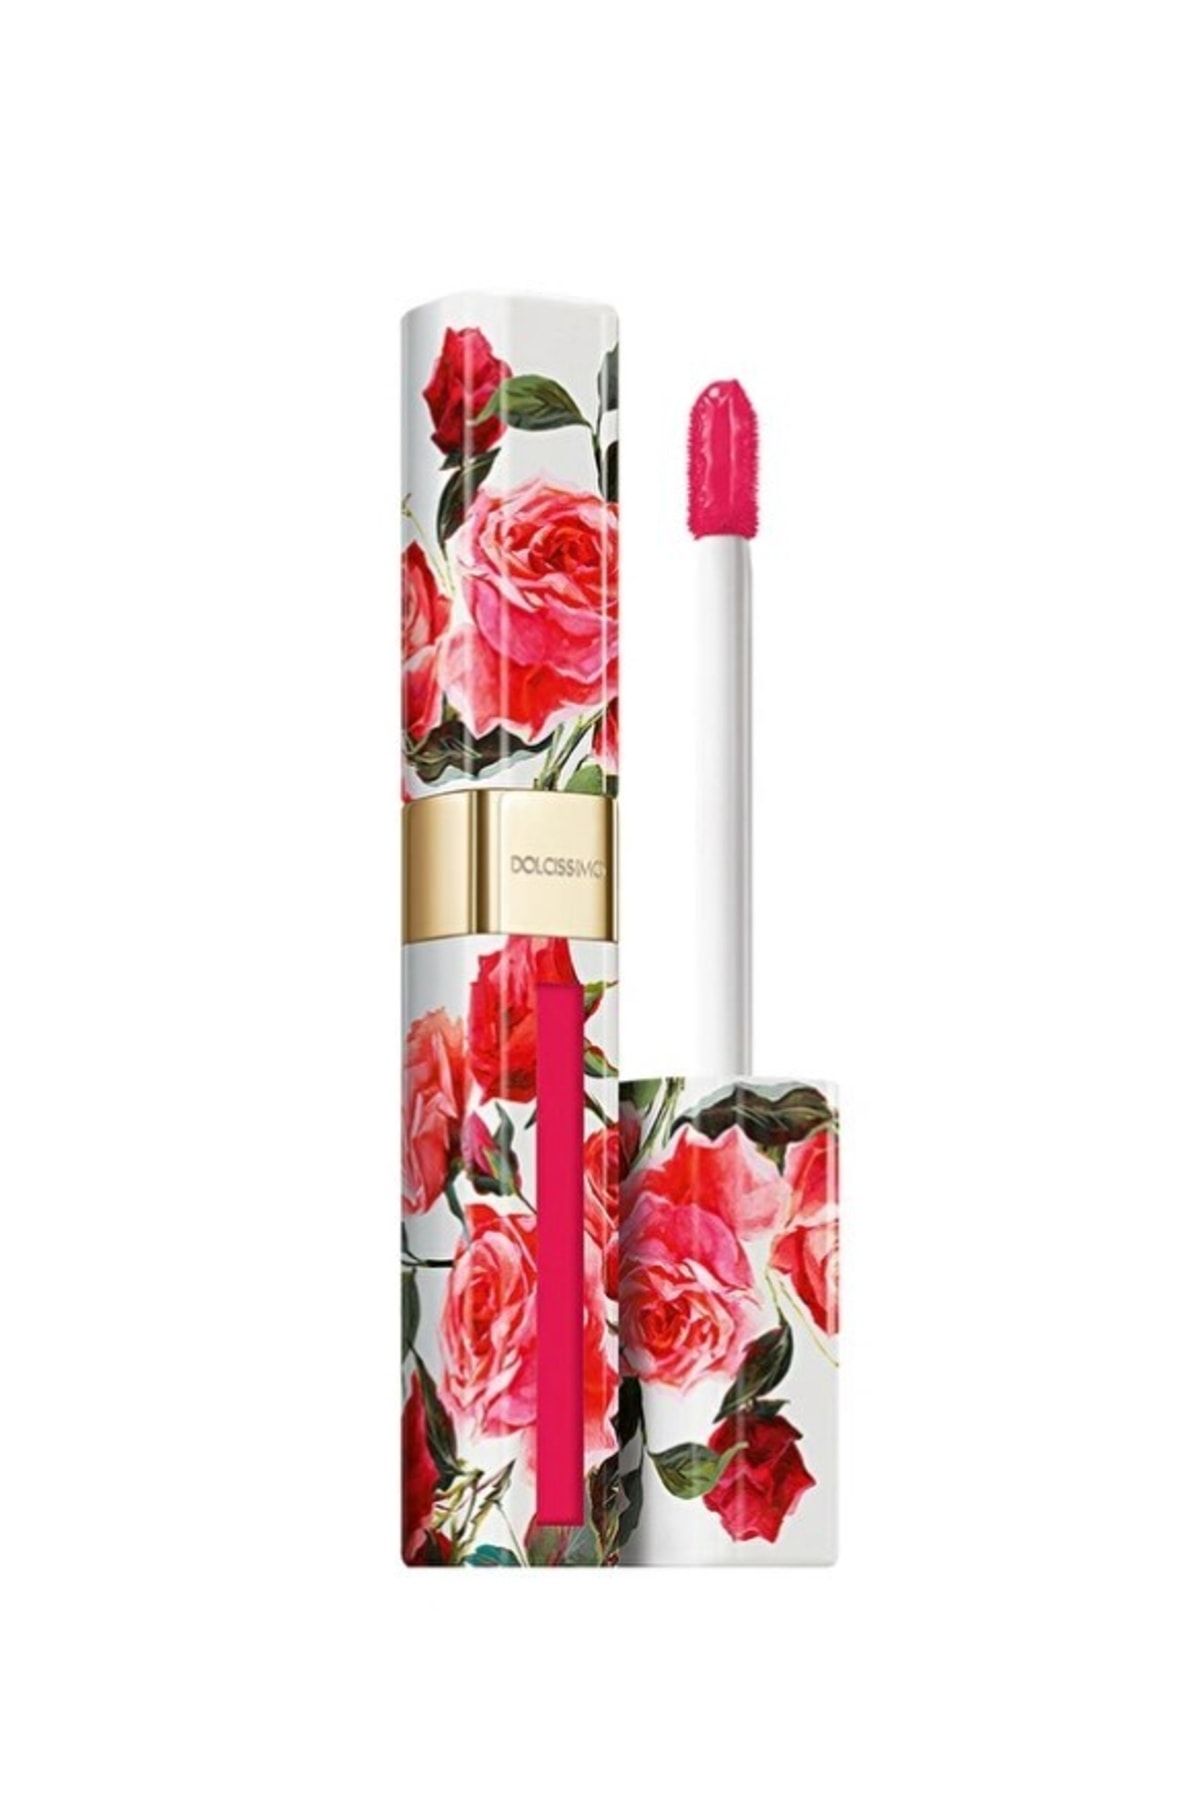 Dolce & Gabbana Beauty Dolcıssımo Matte Lıquıd Lıpcolour 19 Rasberry 5ml